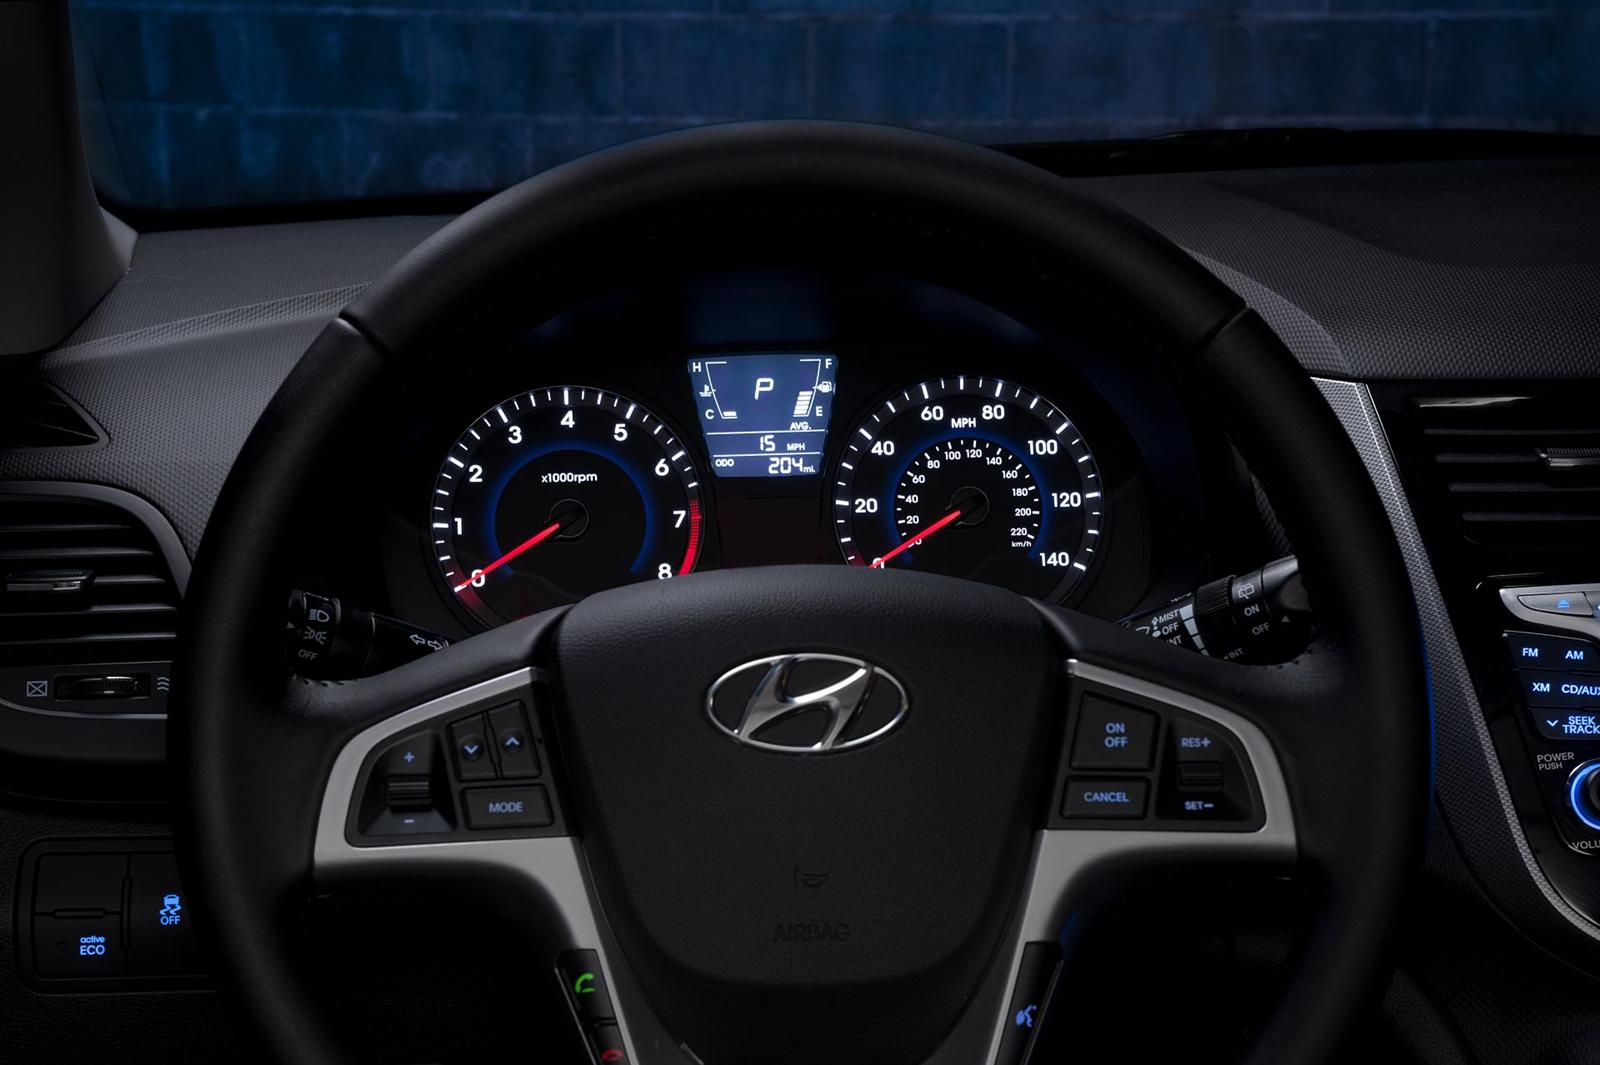 2013 Hyundai Accent